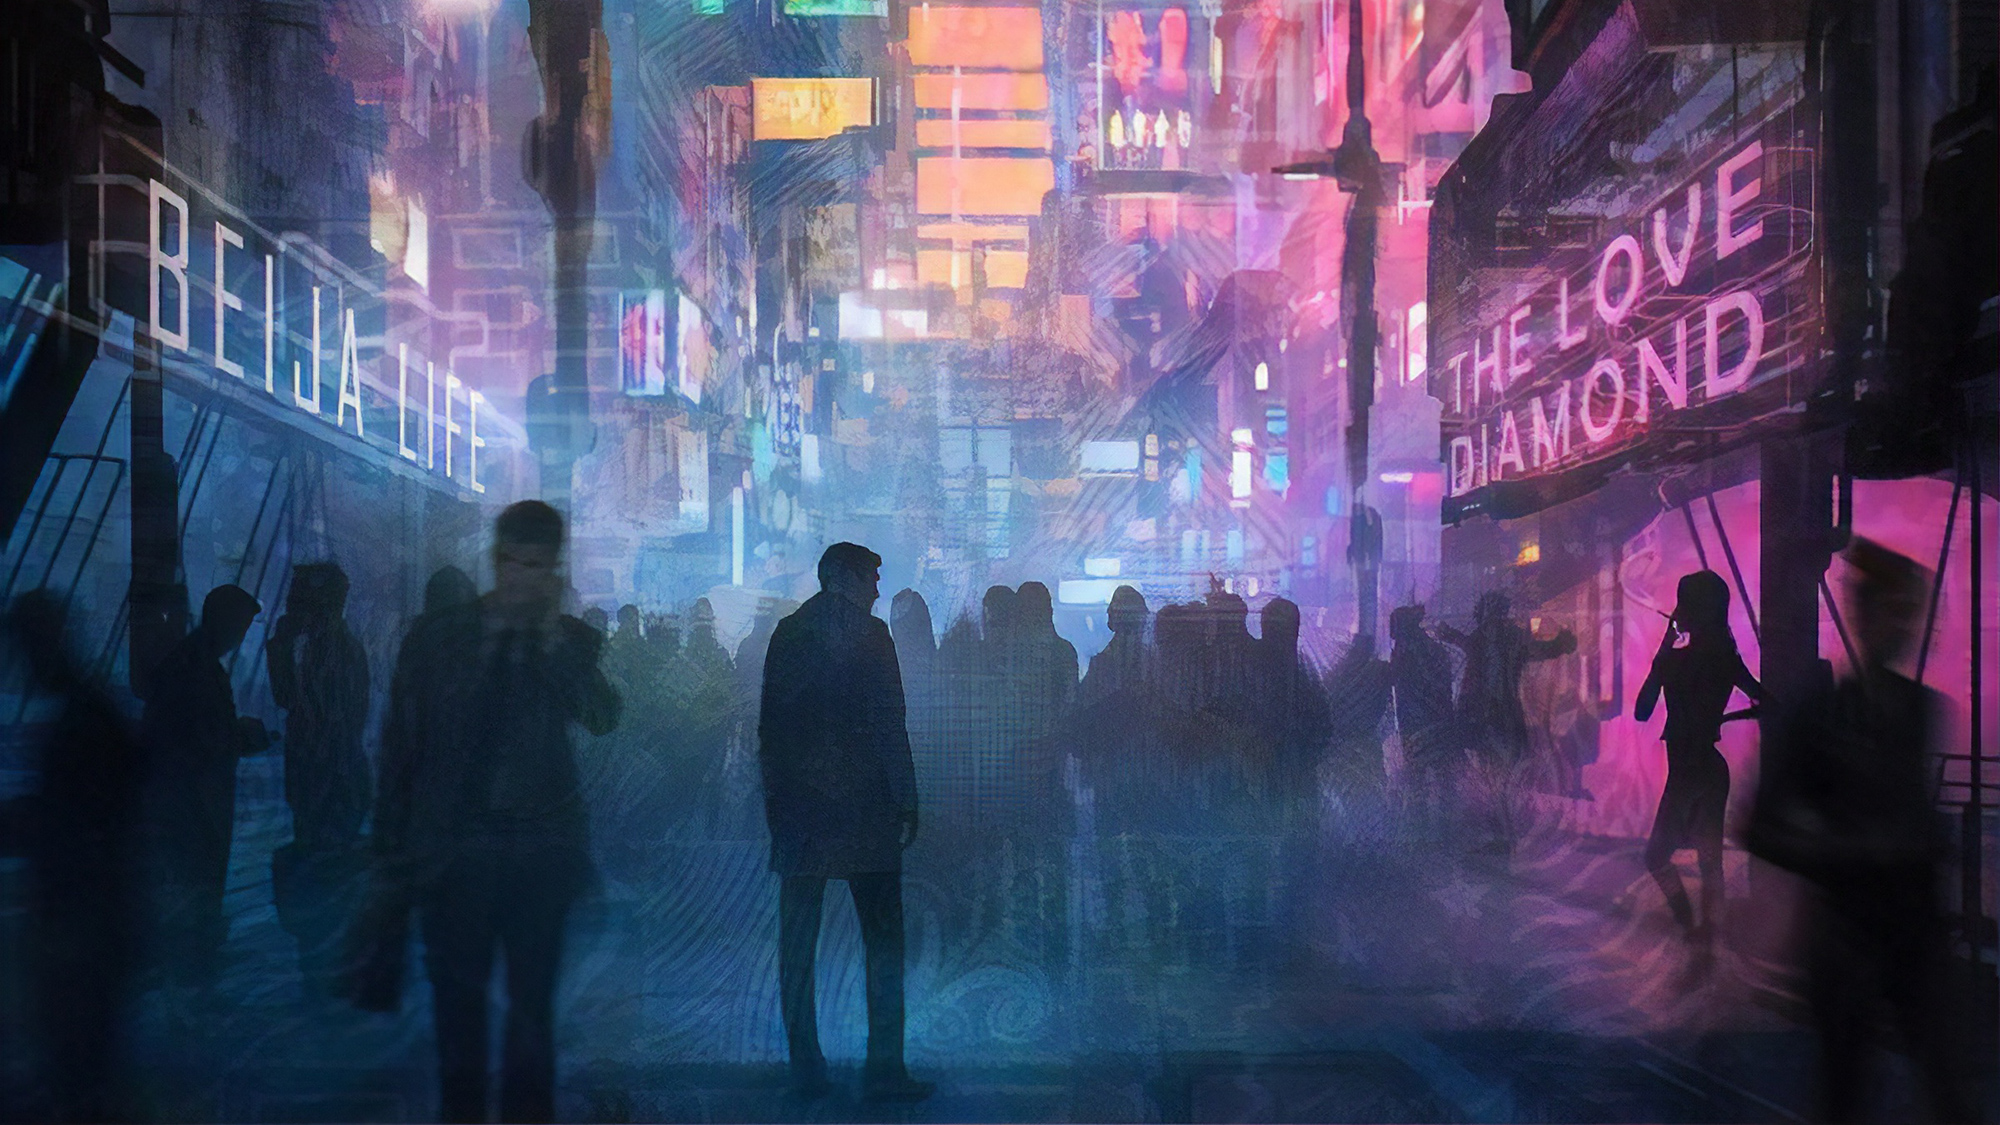 The Cyberpunk Street Hd Artist 4k Wallpapers Images Backgrounds